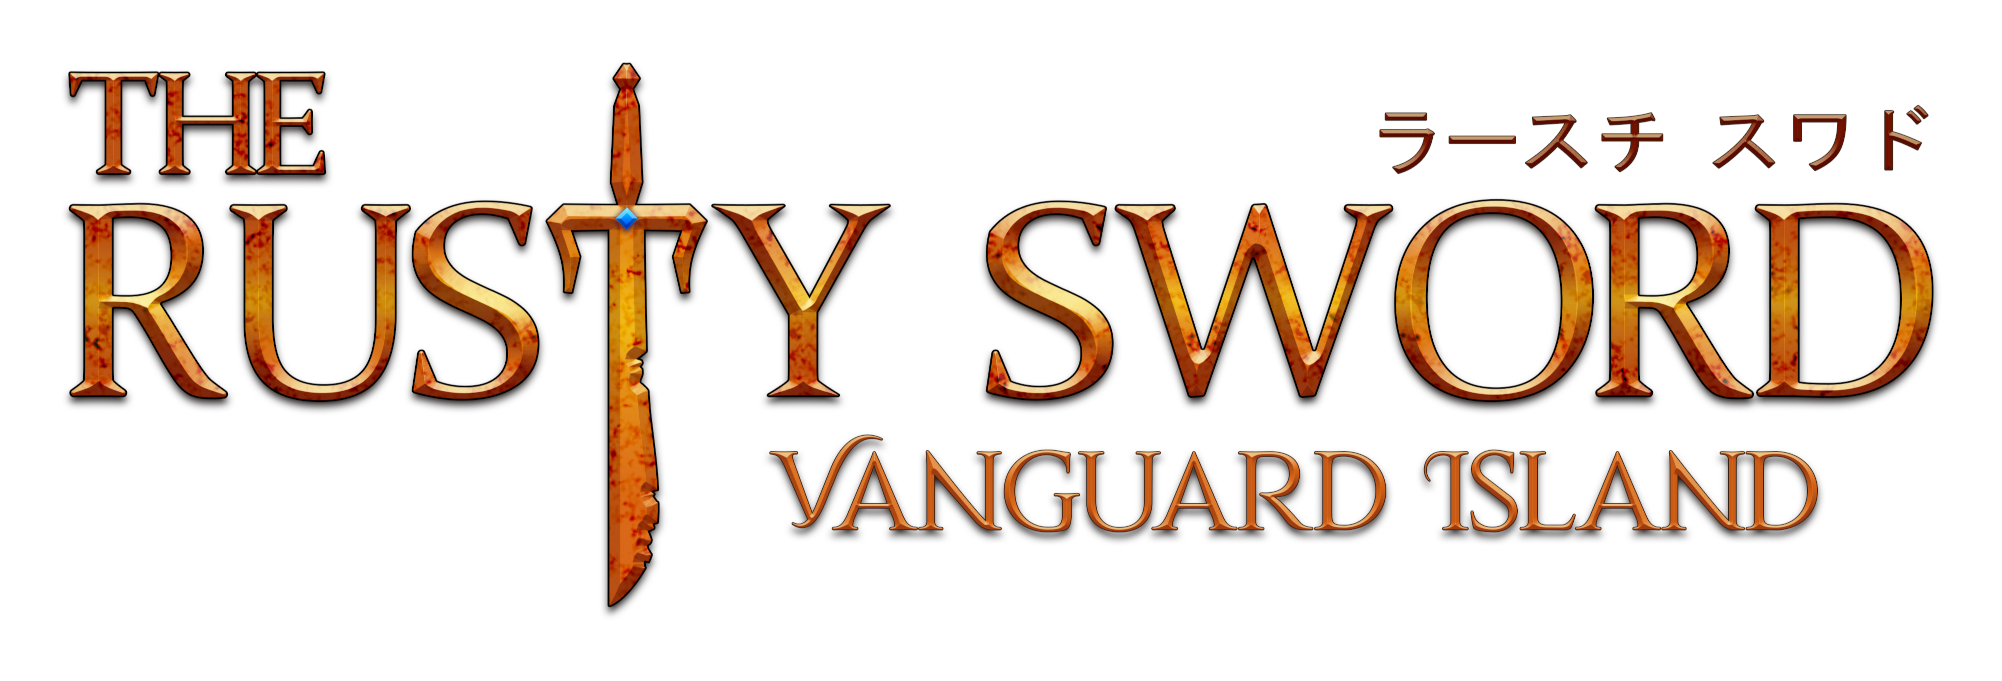 The Rusty Sword logo